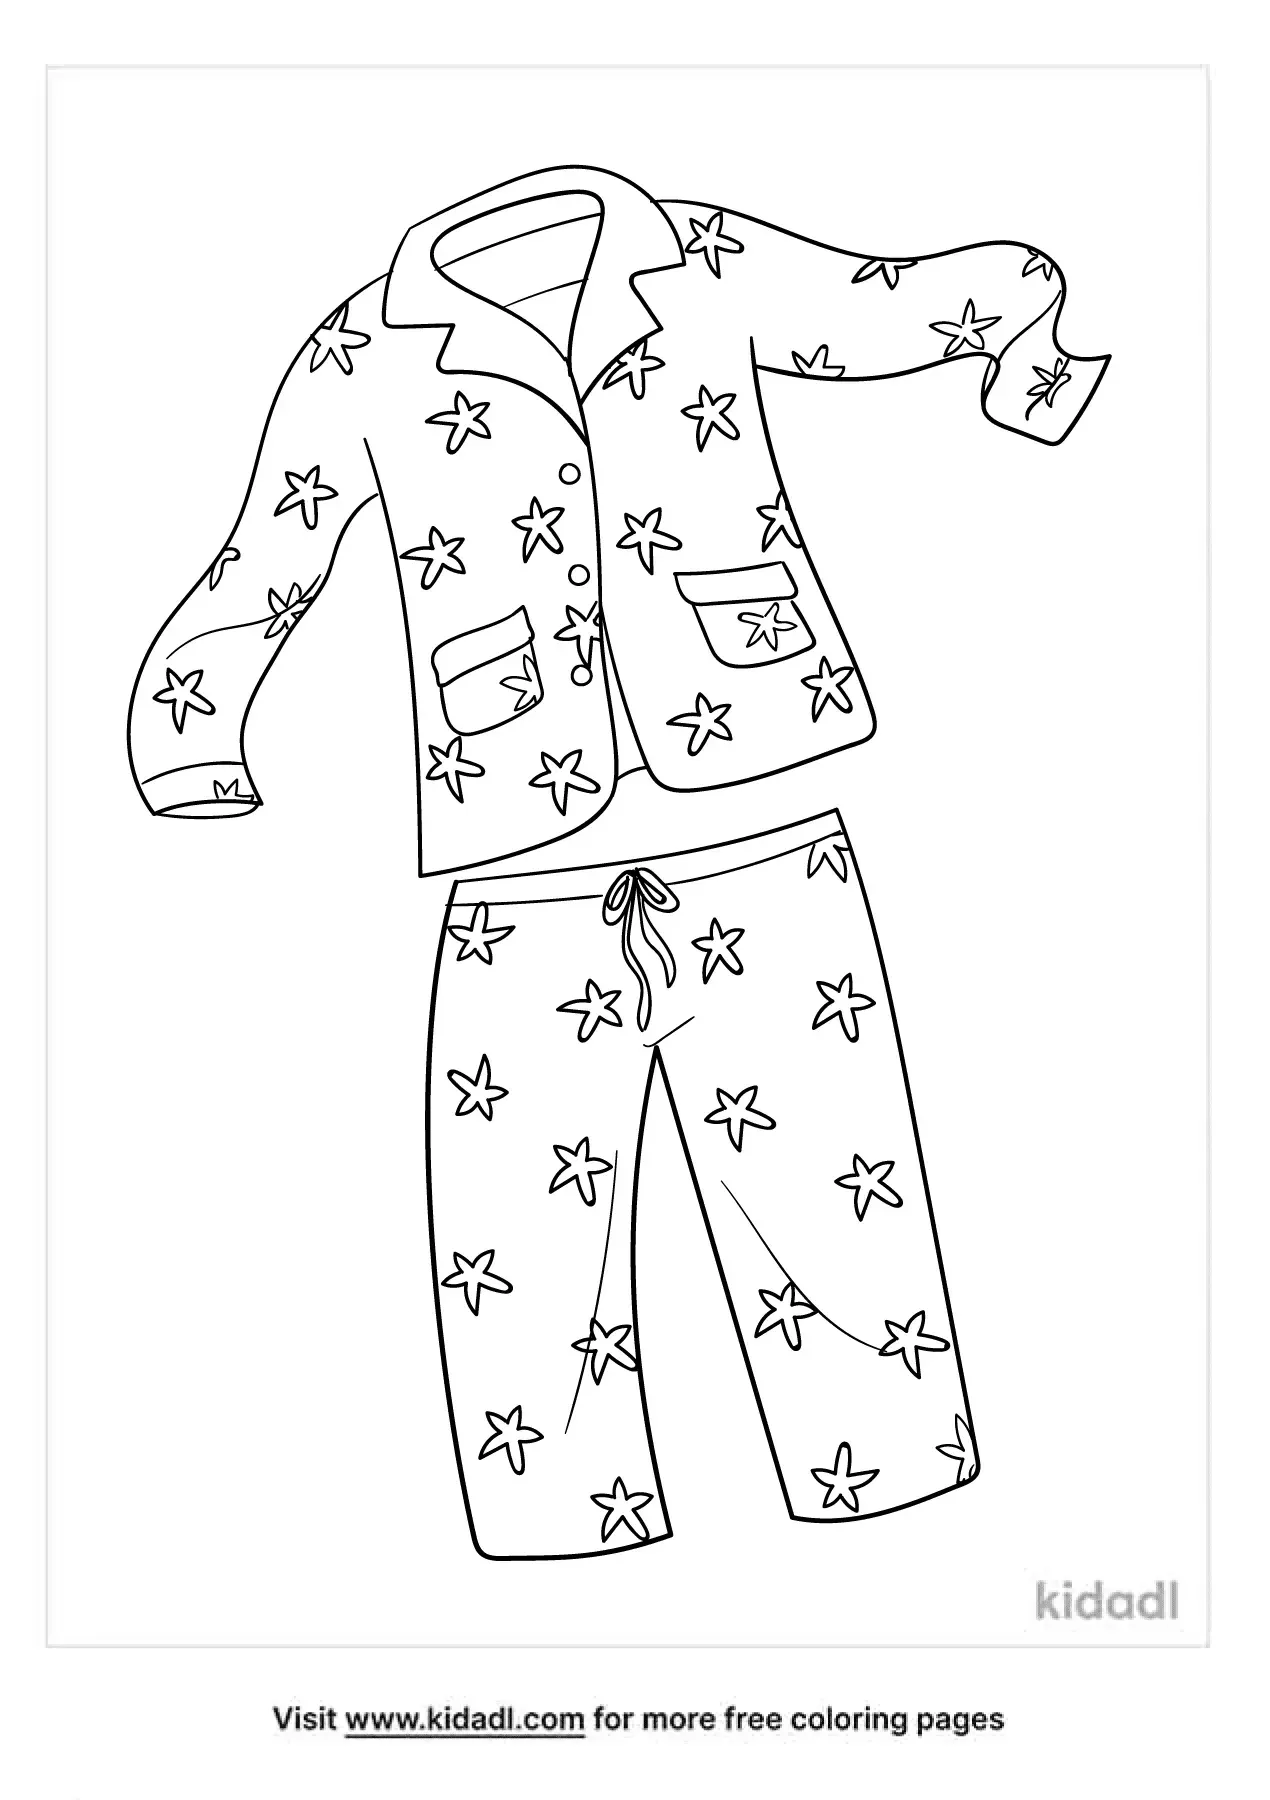 Free Pajamas Coloring Page | Coloring Page Printables | Kidadl